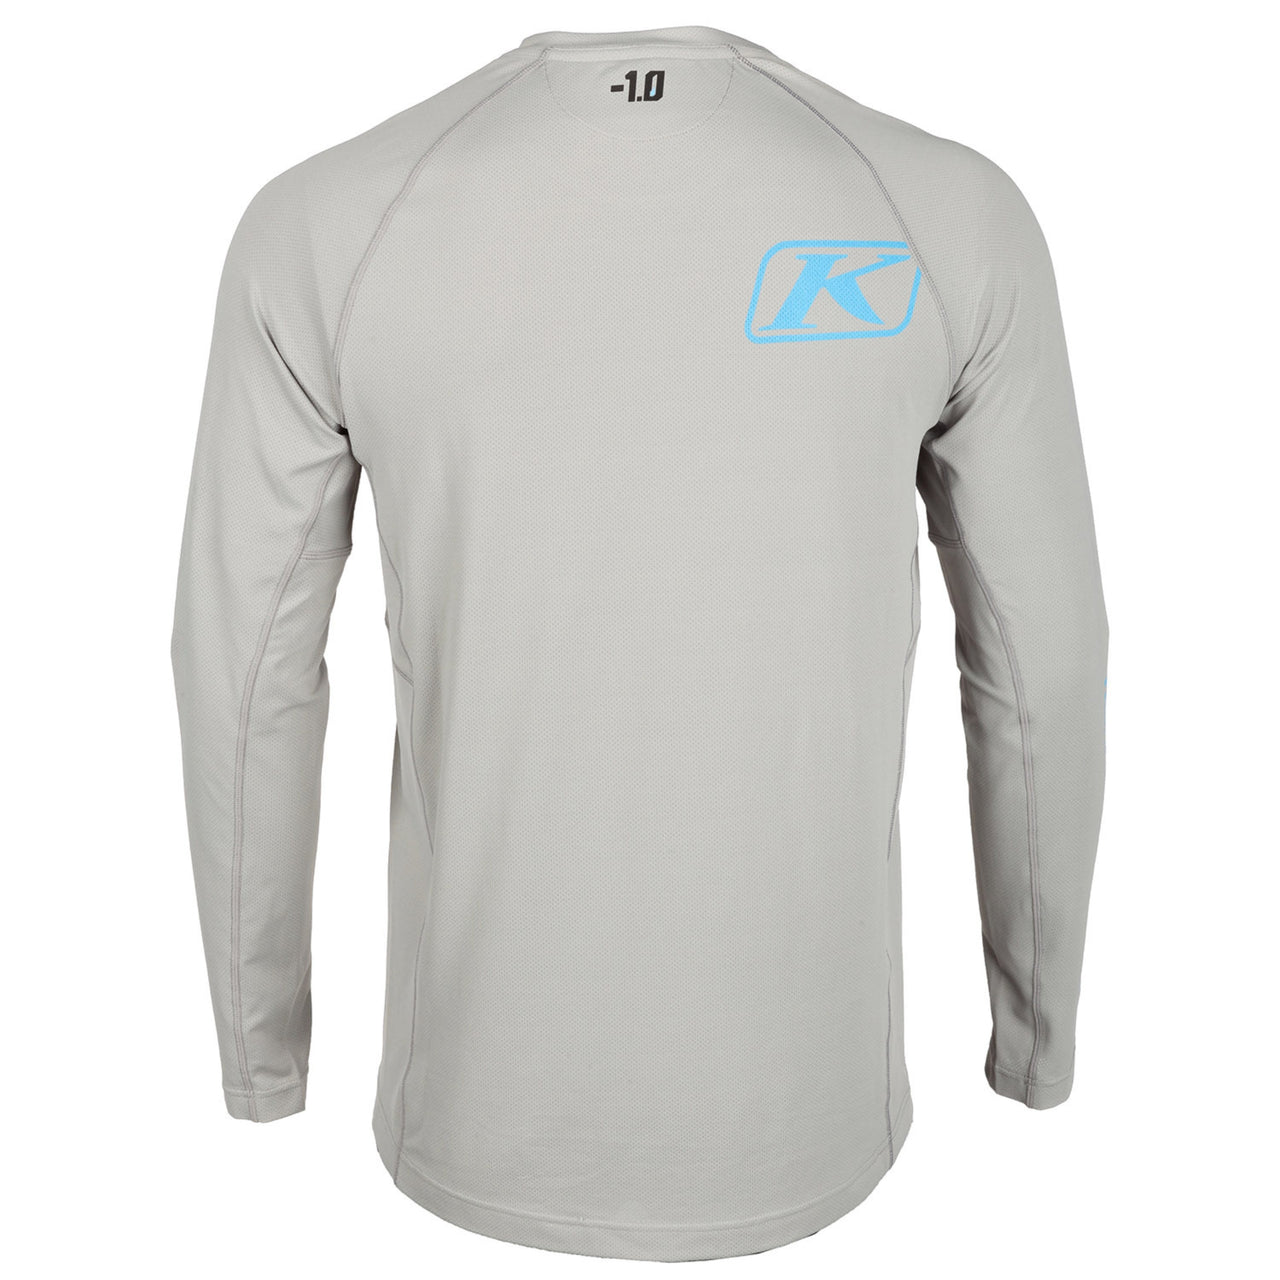 Klim Aggressor -1.0 Cooling Base Layers Long Sleeve Shirt Monument Gray